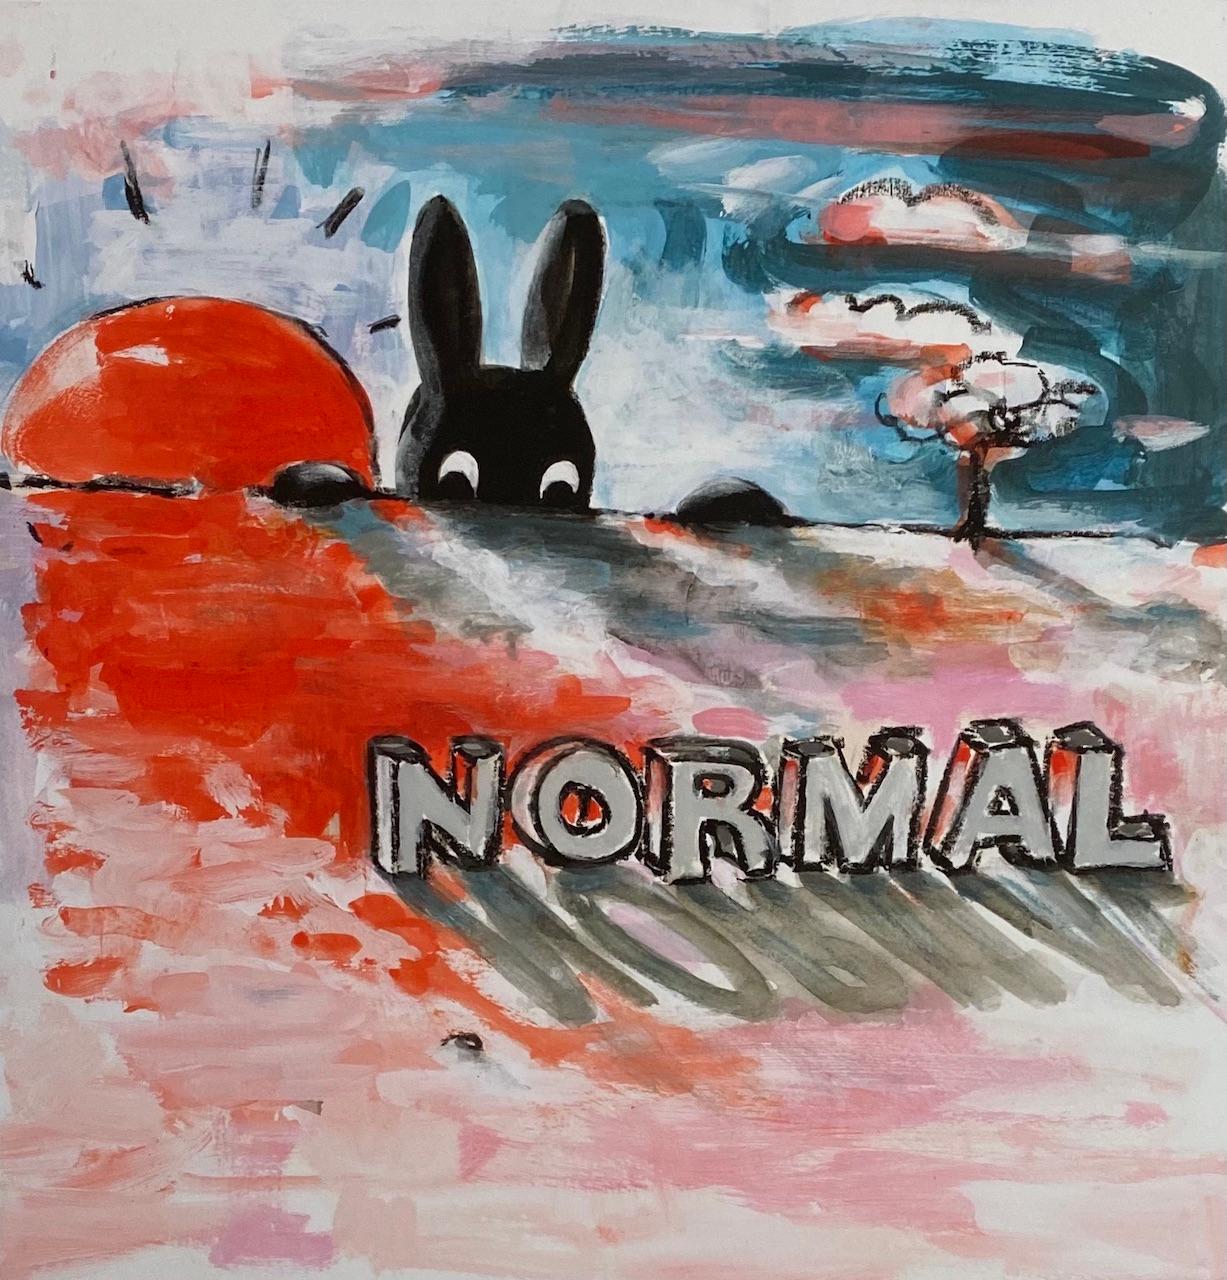 Harry Bunce Animal Print - The New Normal, Limited edition print, Bunny, Animal print, Sunset 